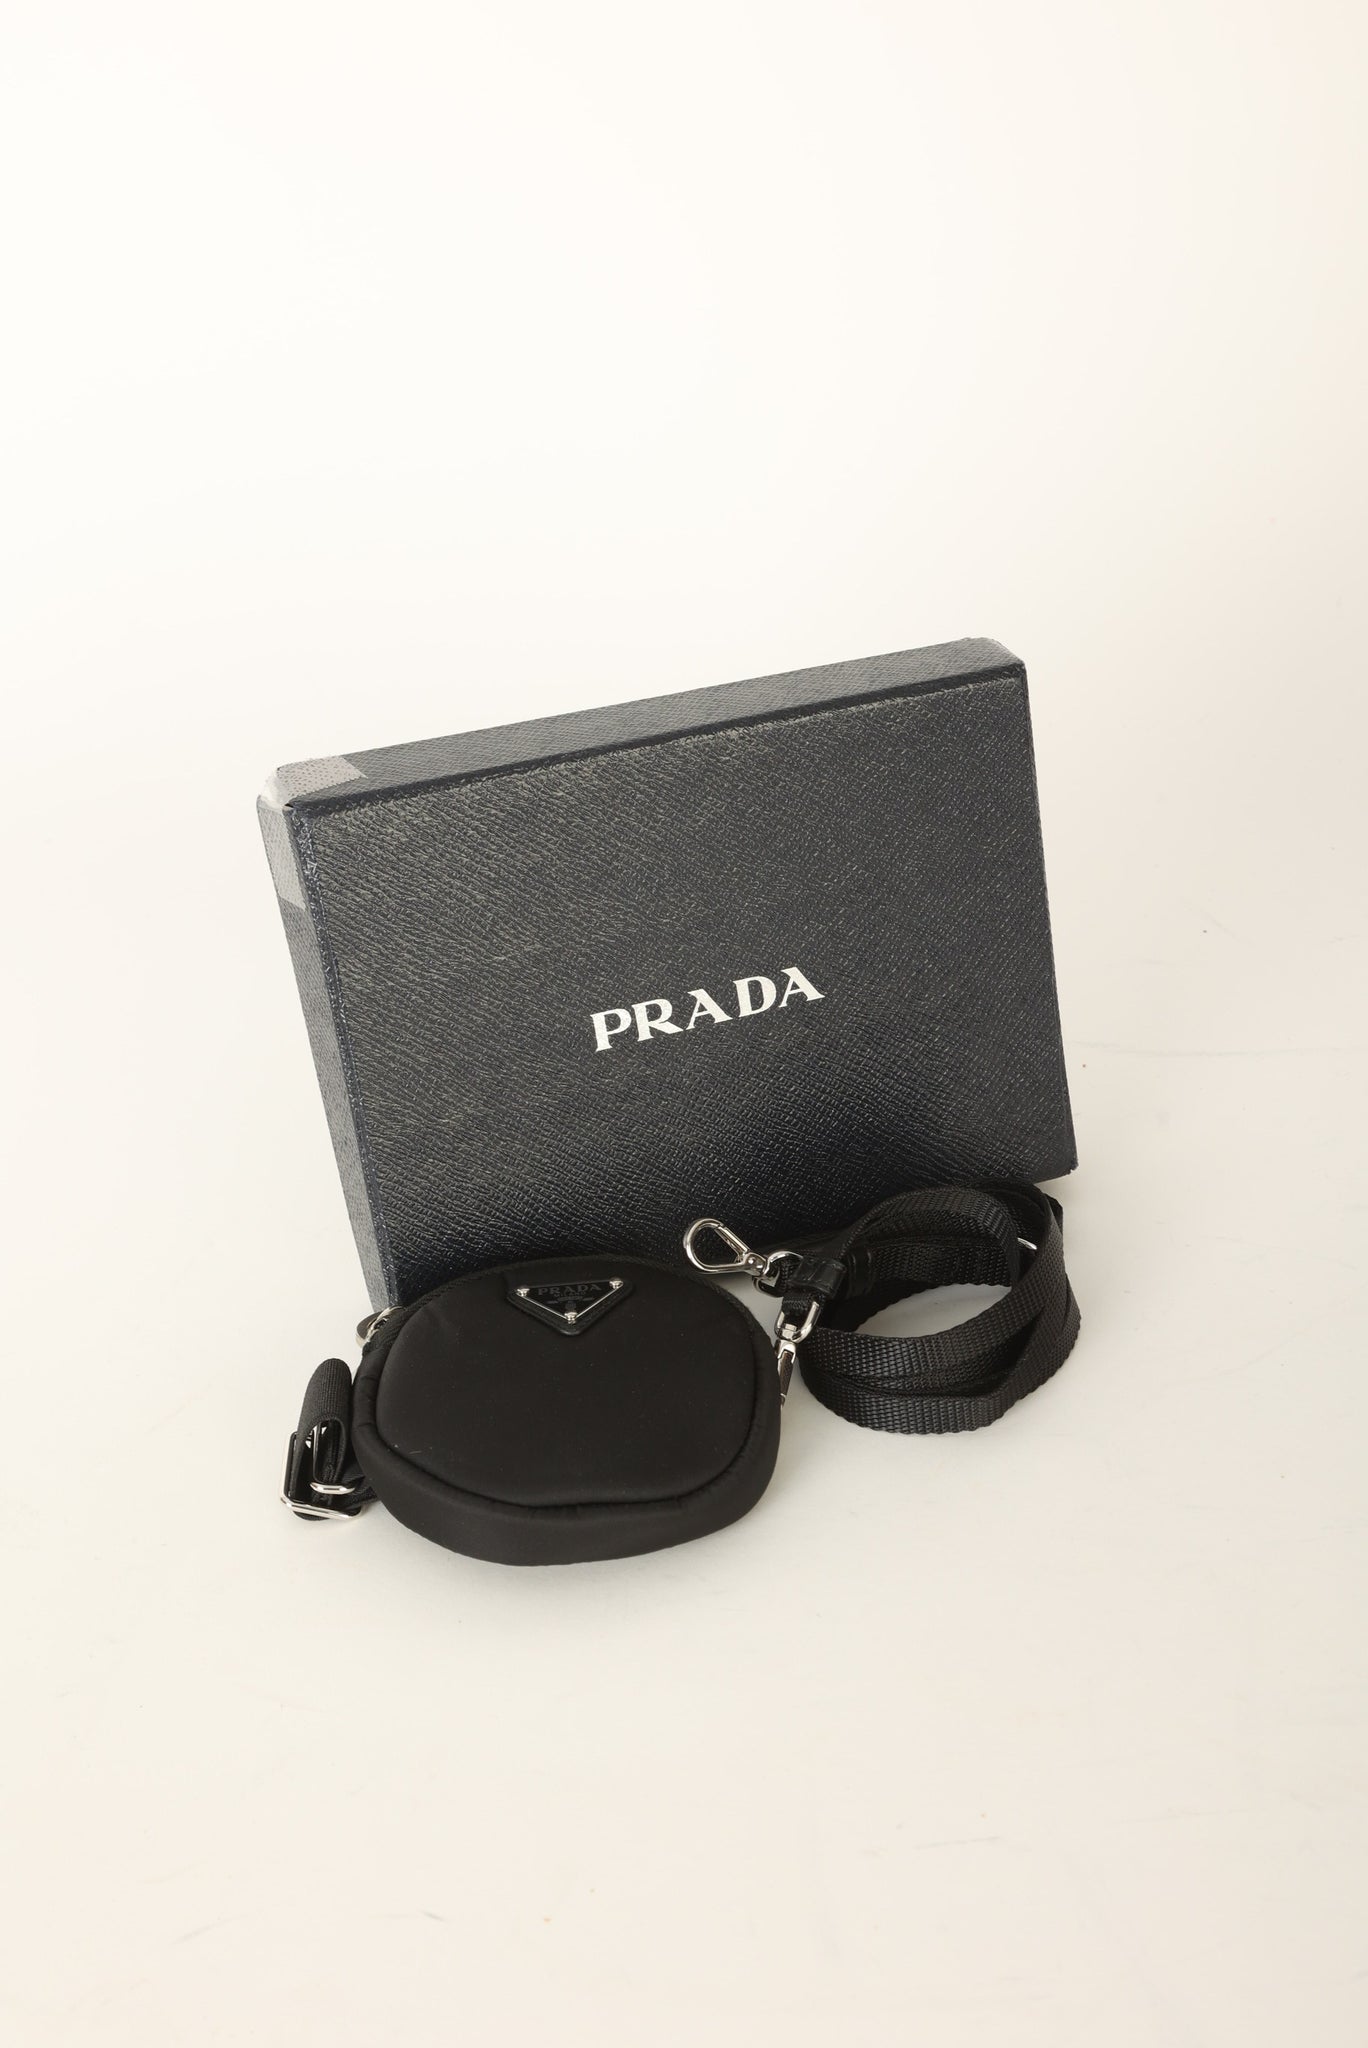 Prada Black Saffiano Leather Triangle Logo Continental Wallet 1MH132 – ZAK  BAGS ©️ | Luxury Bags